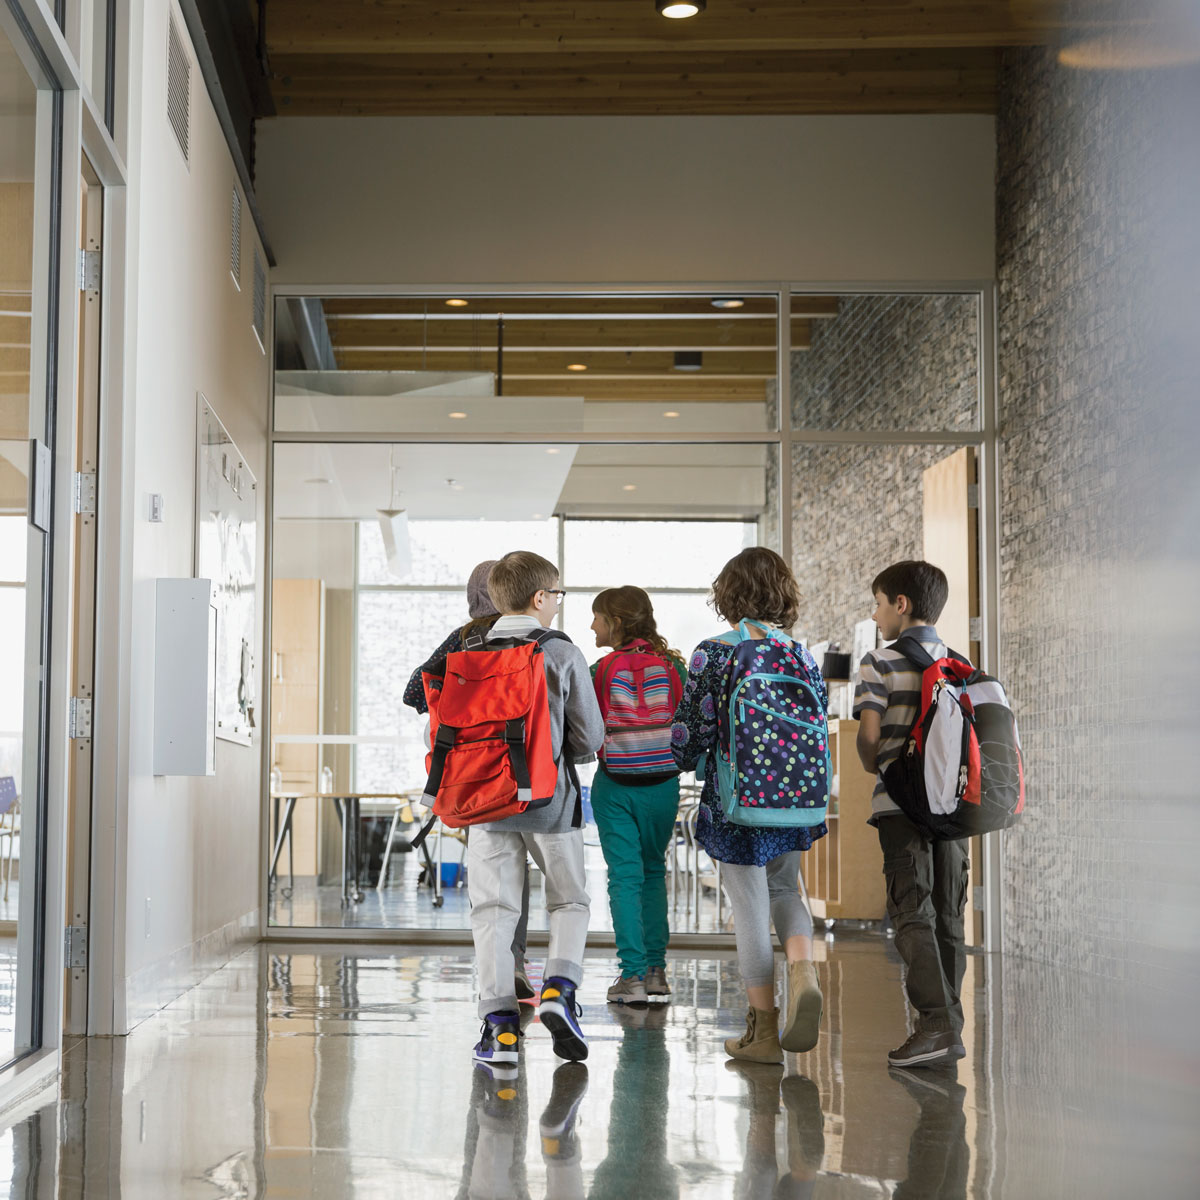 kids walking through hallway in school